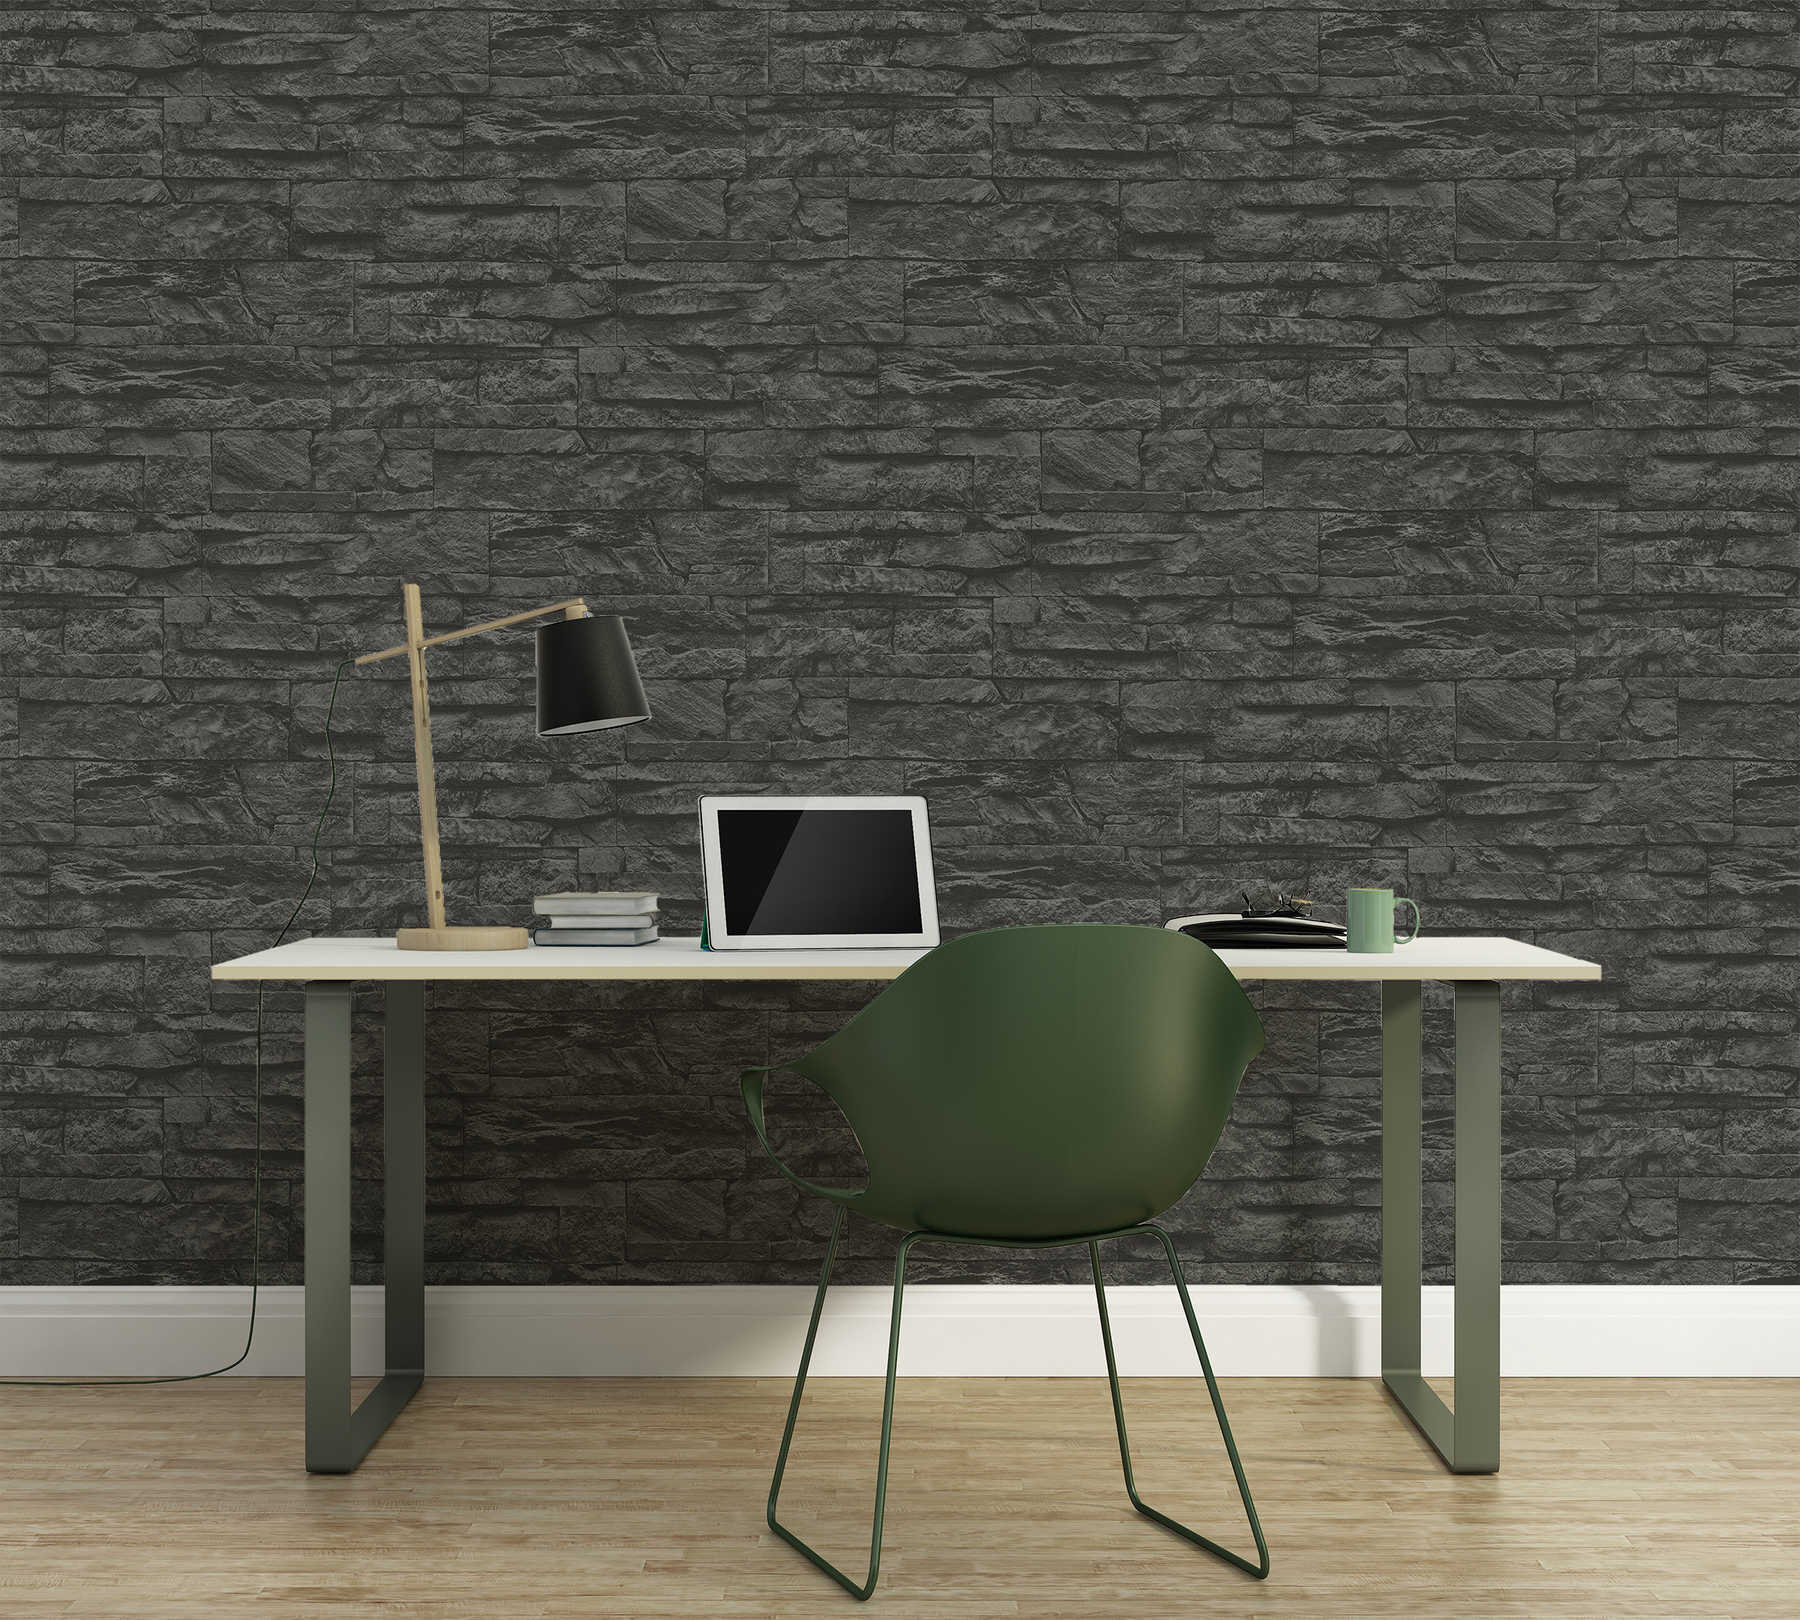             Black stone look wallpaper detailed & realistic - grey, black
        